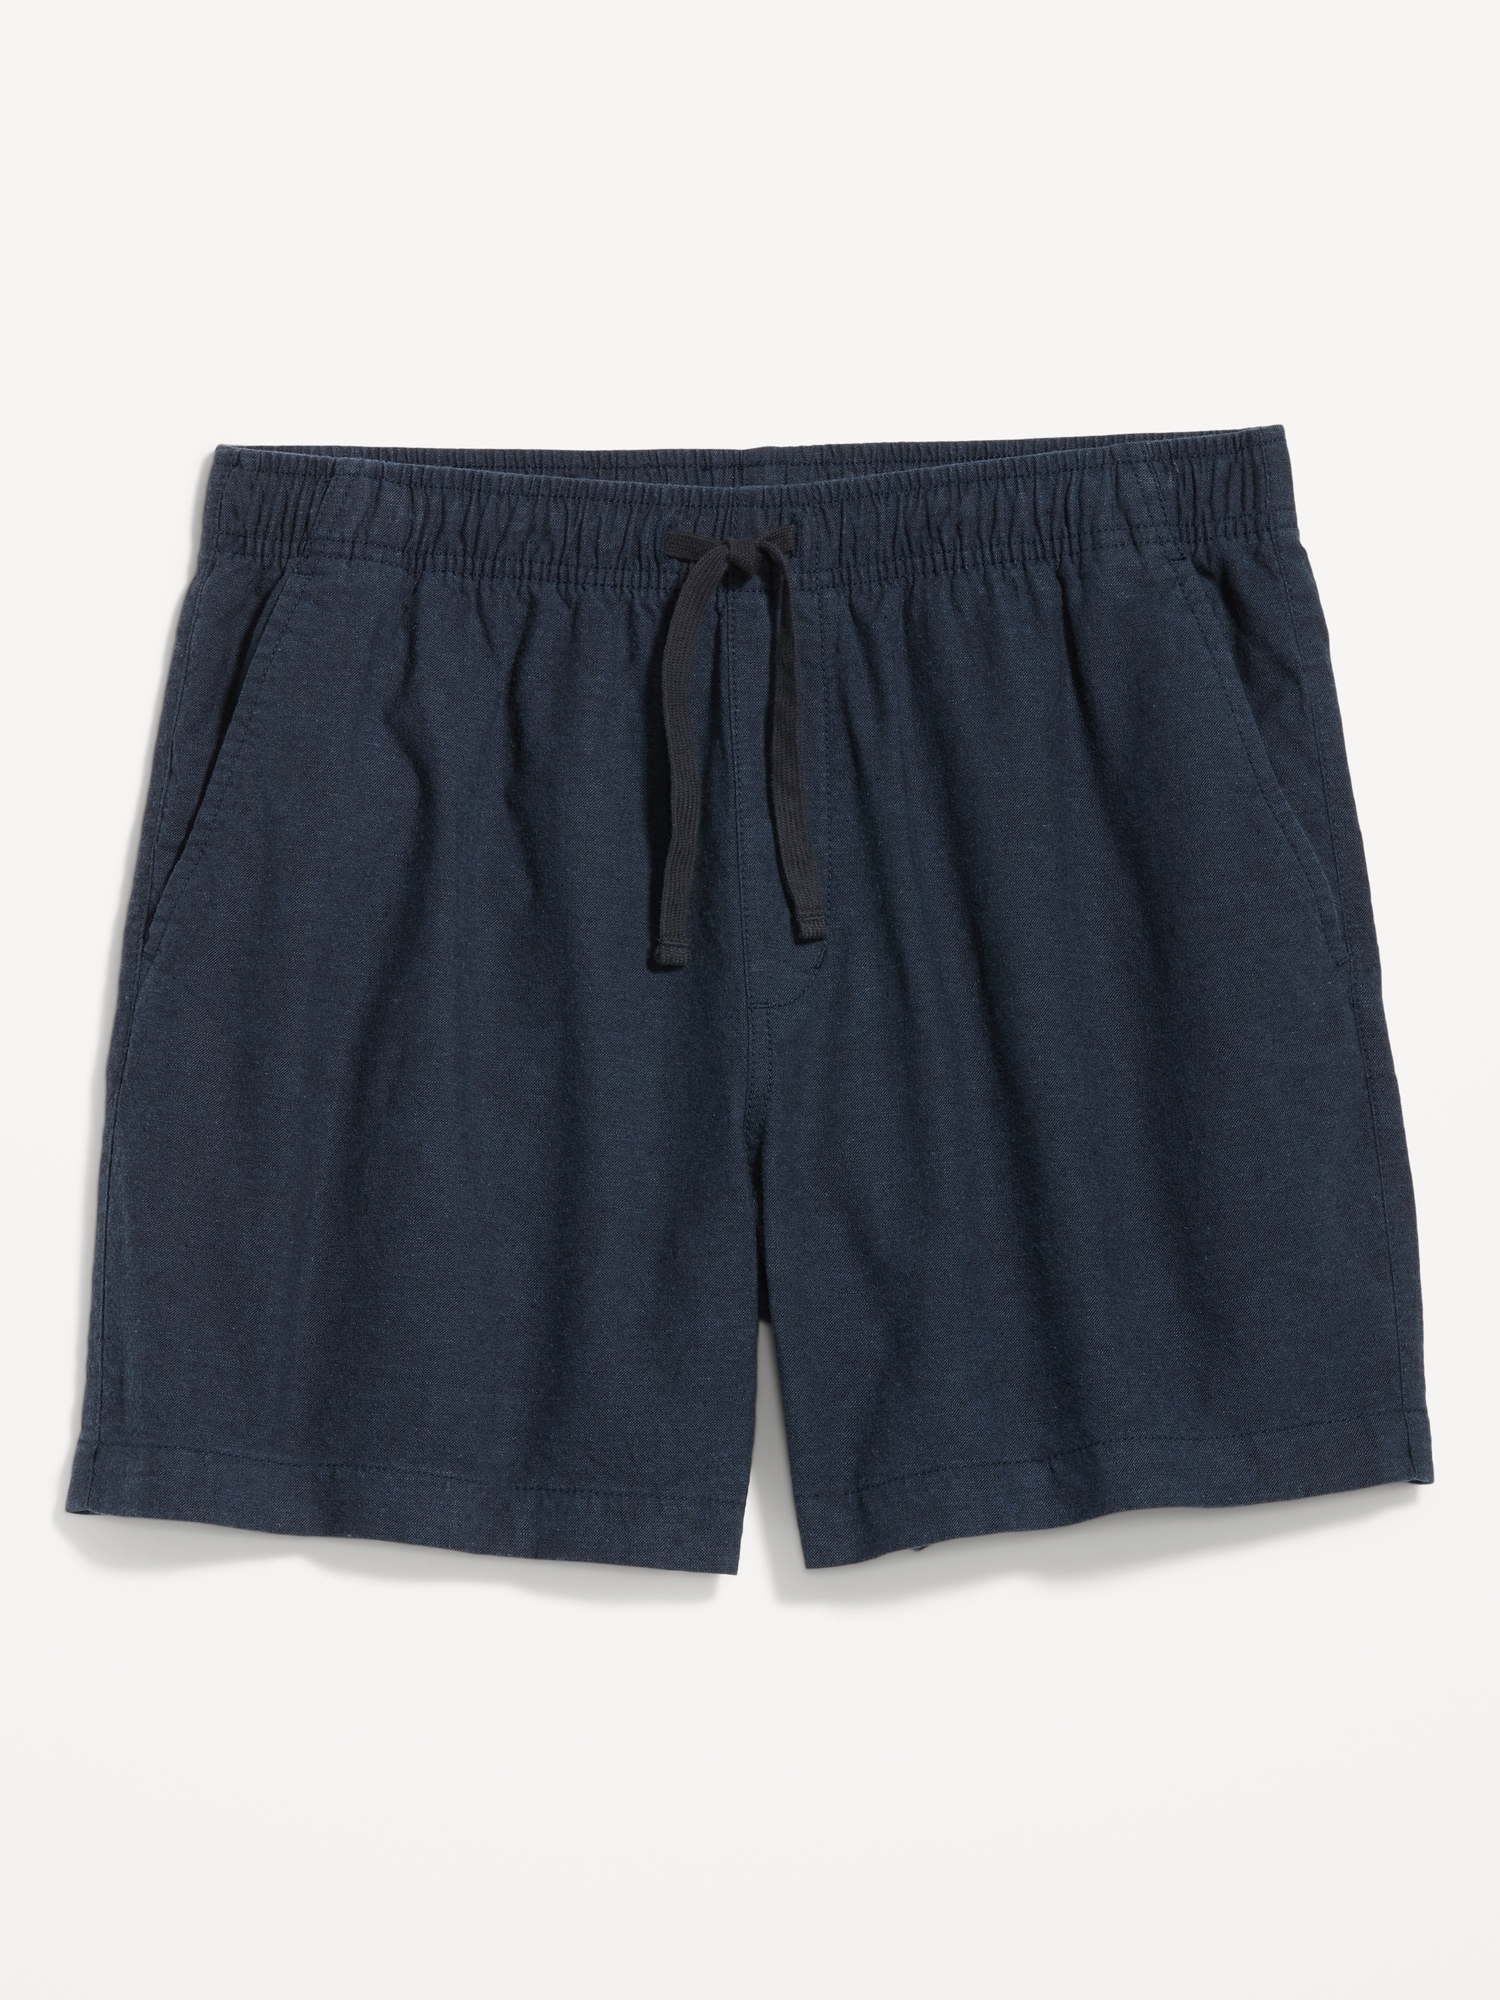 Linen-Blend Jogger Shorts for Men -- 5-inch inseam